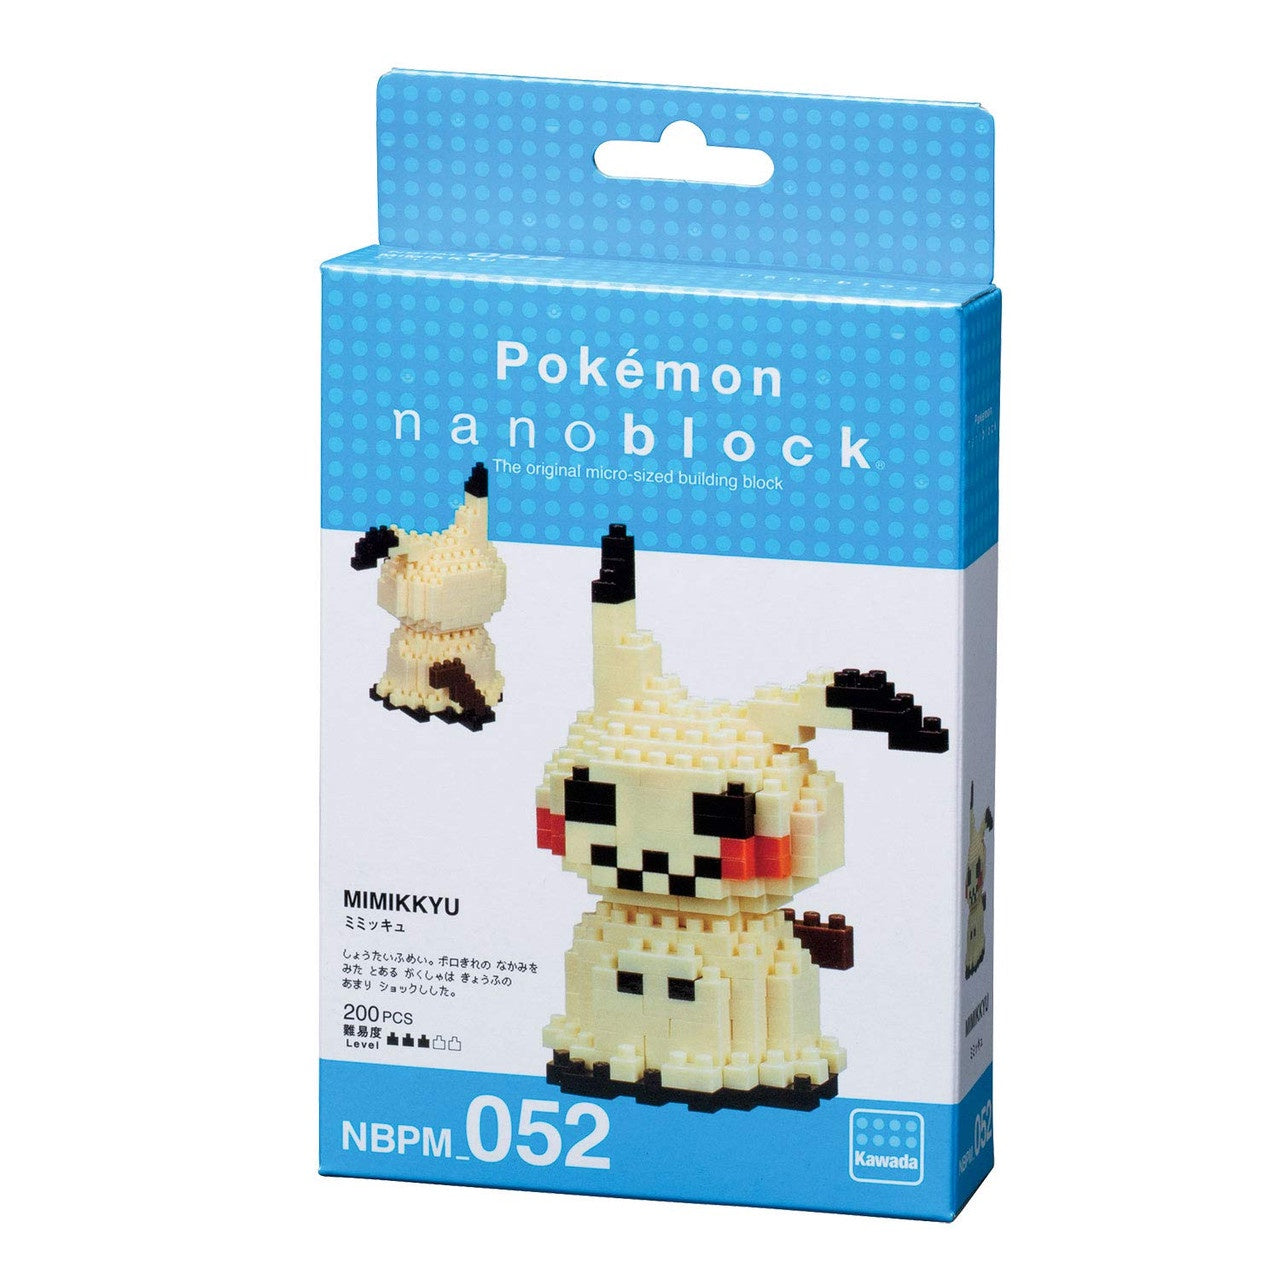 Nanoblock Pokemon Series Mimikyu